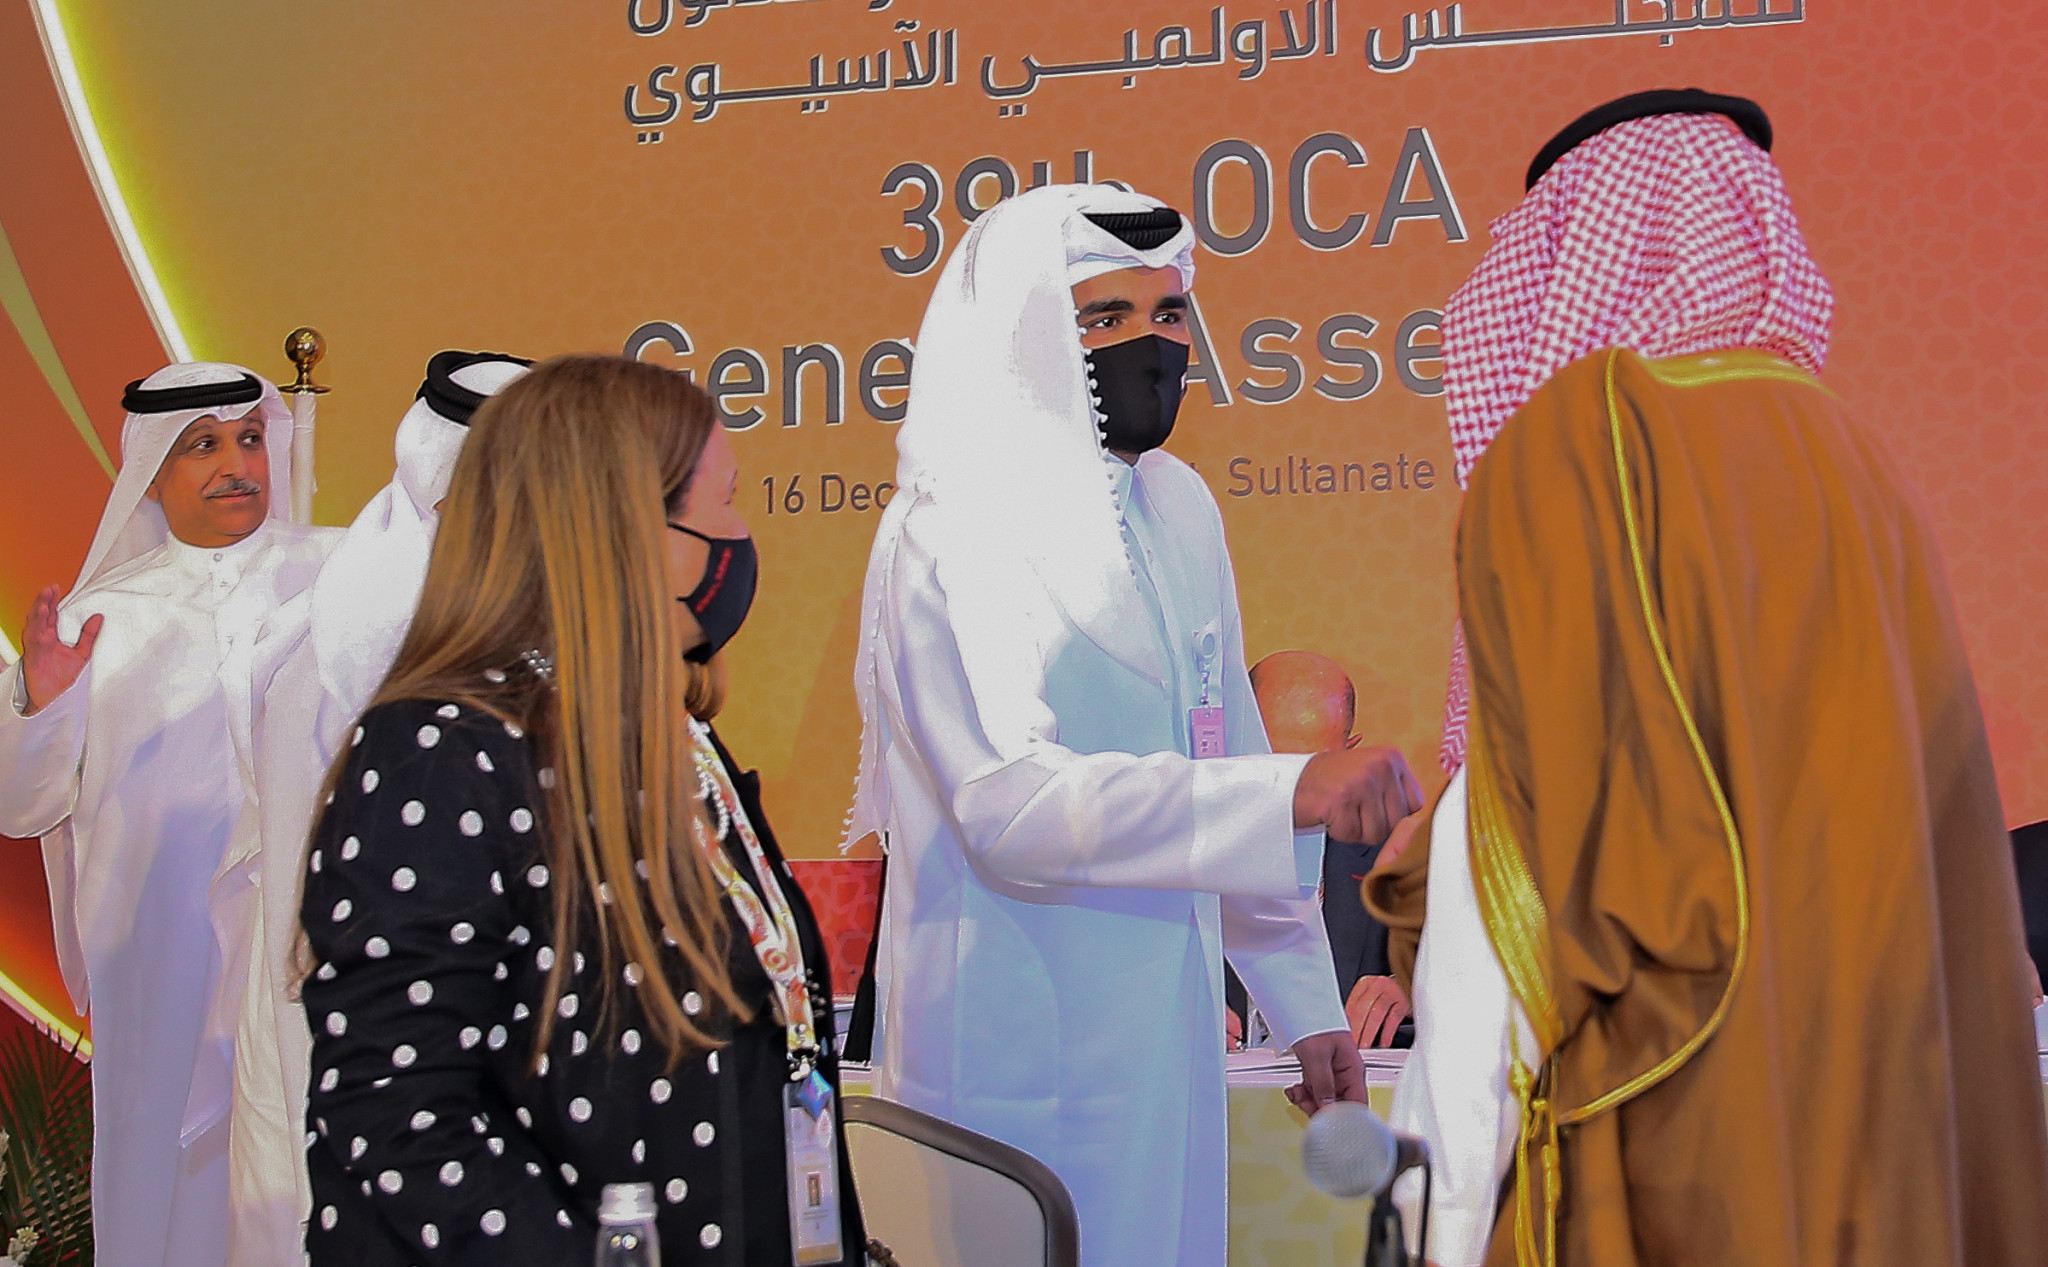 Prince Abdulaziz bin Turki Al-Faisal Al-Saud, President of the SAOC, right, congratulates Sheikh Joaan bin Hamad bin Khalifa Al Thani, QOC President, after Qatar was awarded the 2030 Asian Games ©Getty Images